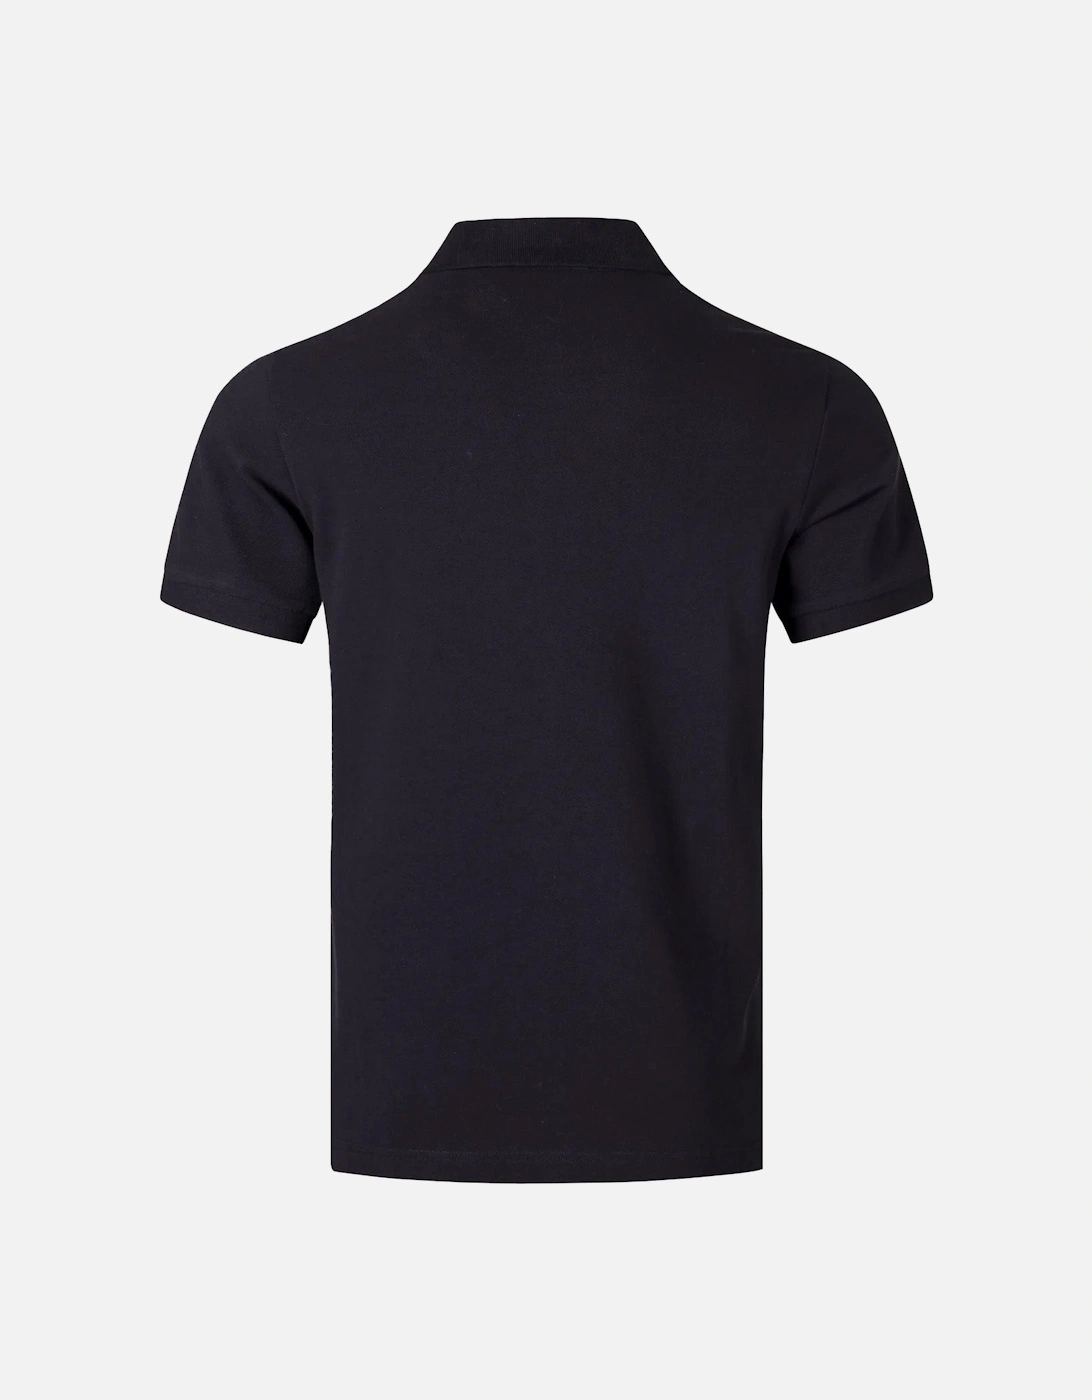 Jeans Couture New V Emblem Polo T-Shirt Black